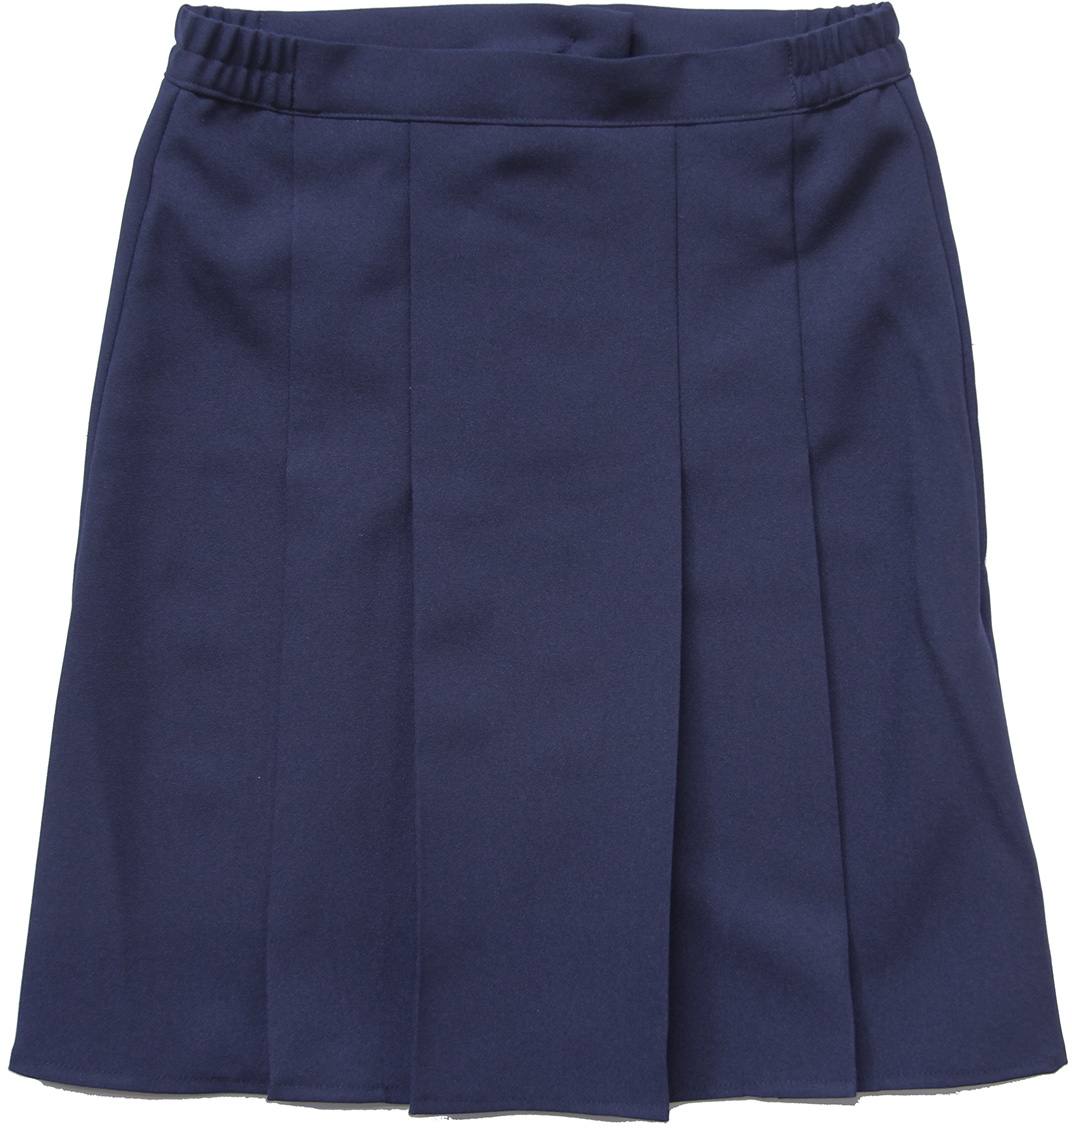 Partiotuote Scout skirt women’s sizes Blue 44